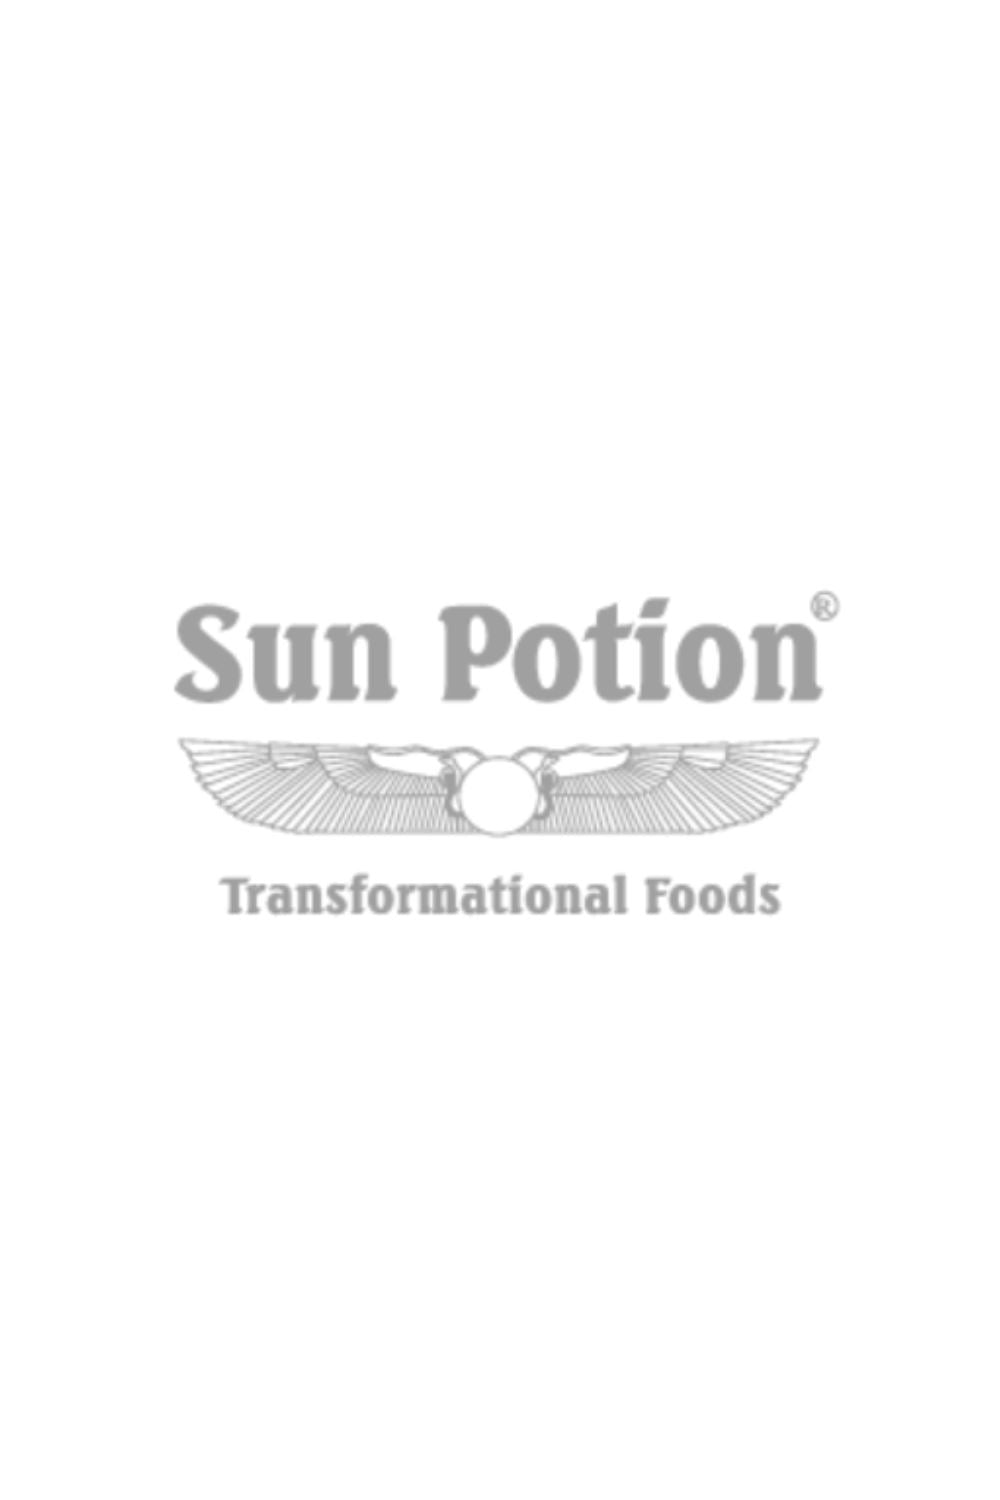 Sun Potion Journal Logo